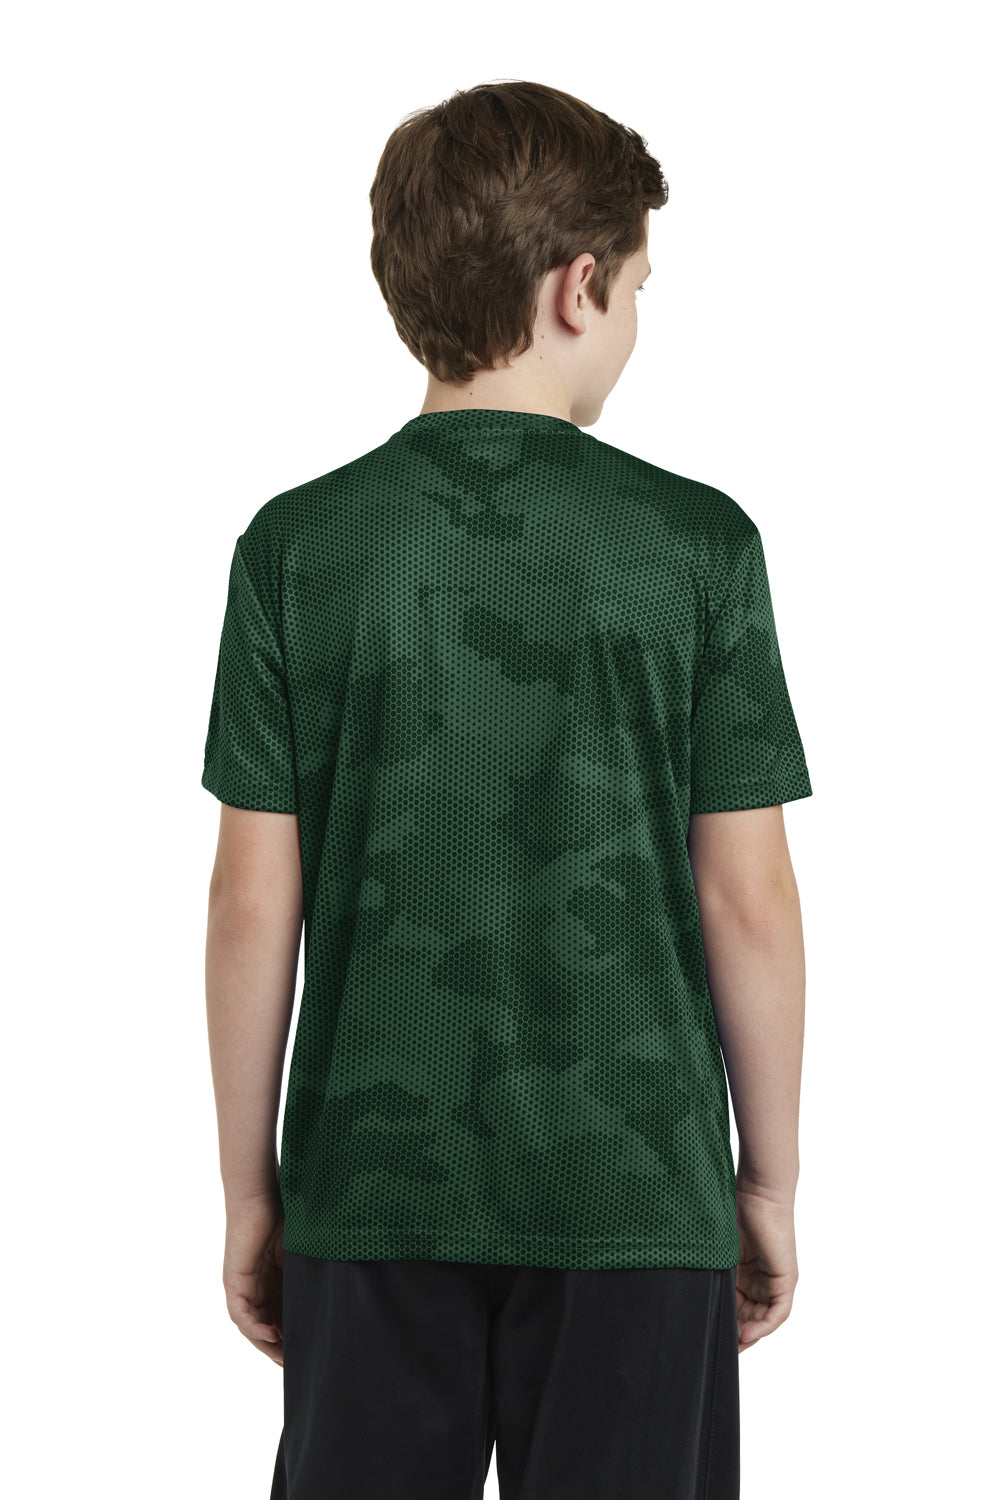 Sport-Tek YST370 Youth CamoHex Moisture Wicking Short Sleeve Crewneck T-Shirt Forest Green Back